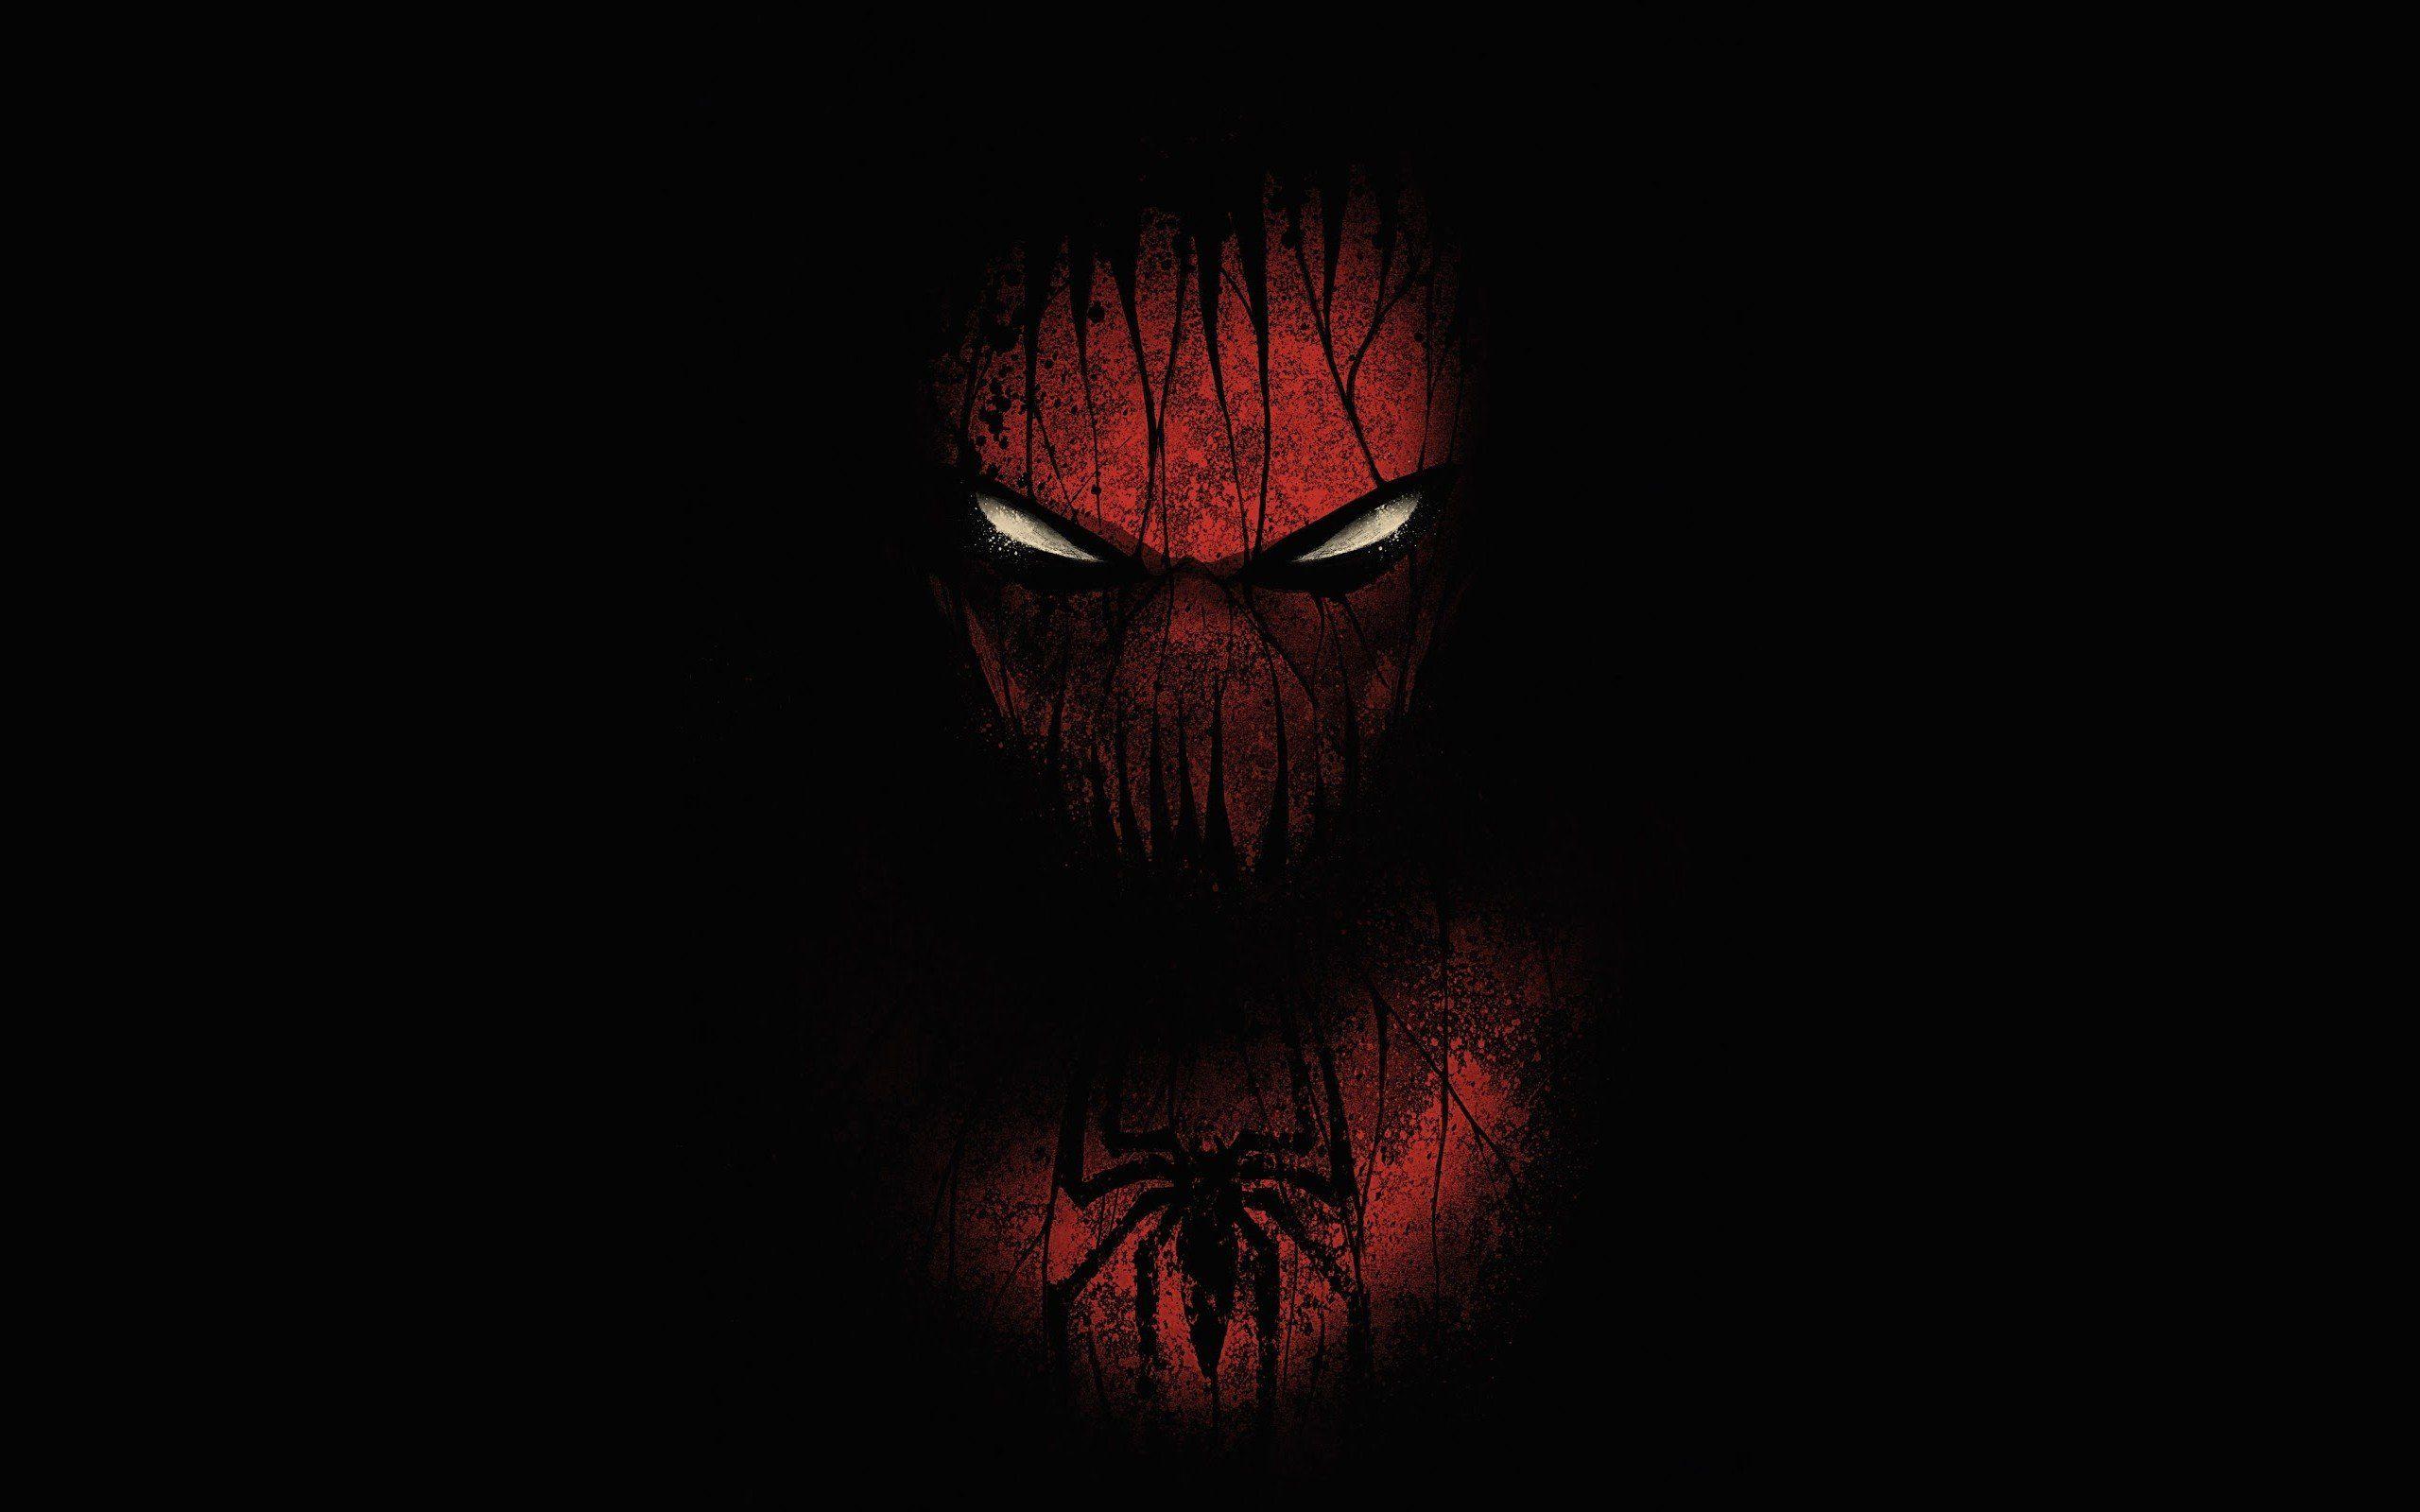 Black and Red Superhero Logo - Black Red Spider Man Artwork Marvel Comics Black Background